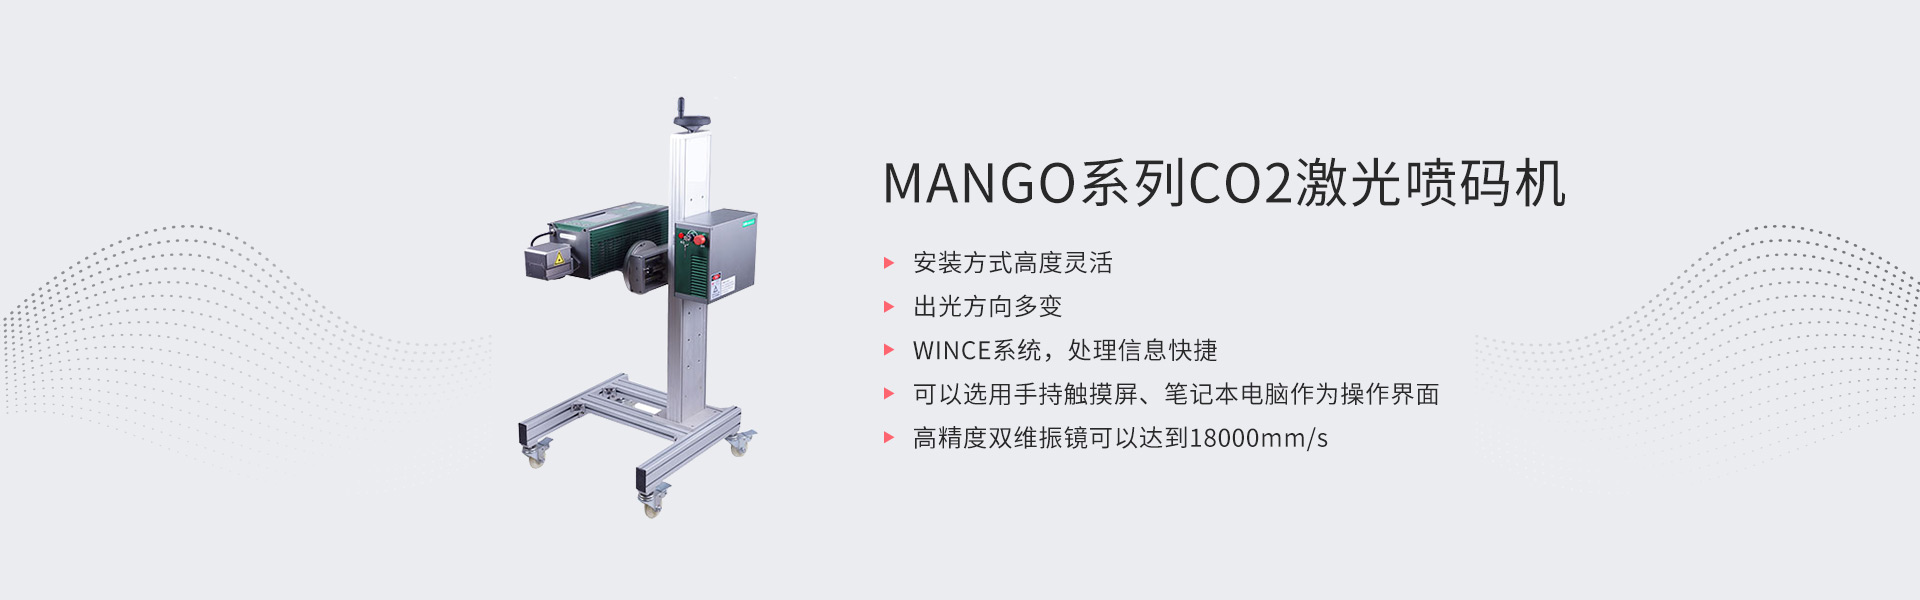 MANGO系列CO2激光喷码机(图1)